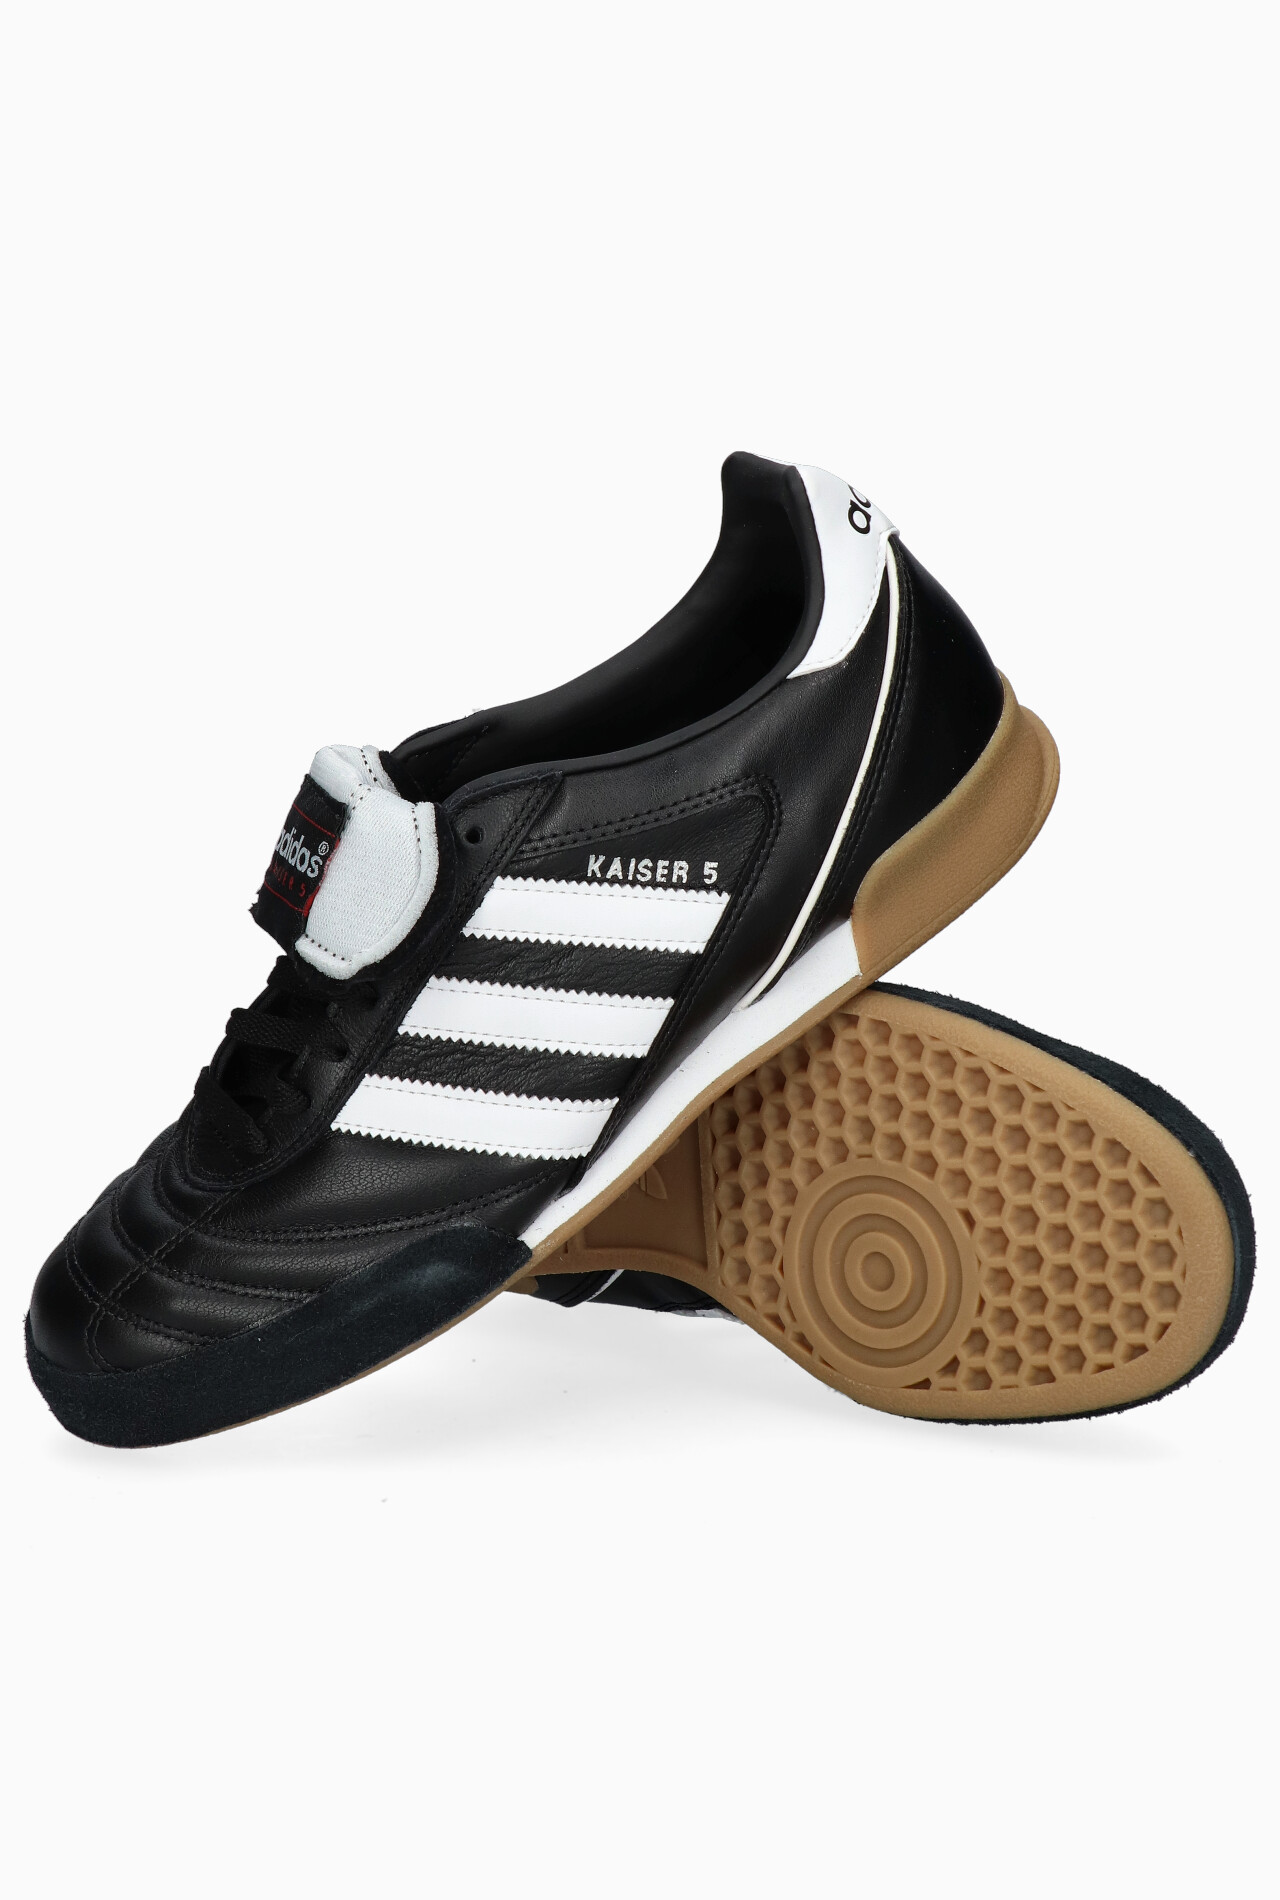 Kunstmatig server Gezichtsvermogen adidas Kaiser 5 Goal Boots | R-GOL.com - Football boots & equipment